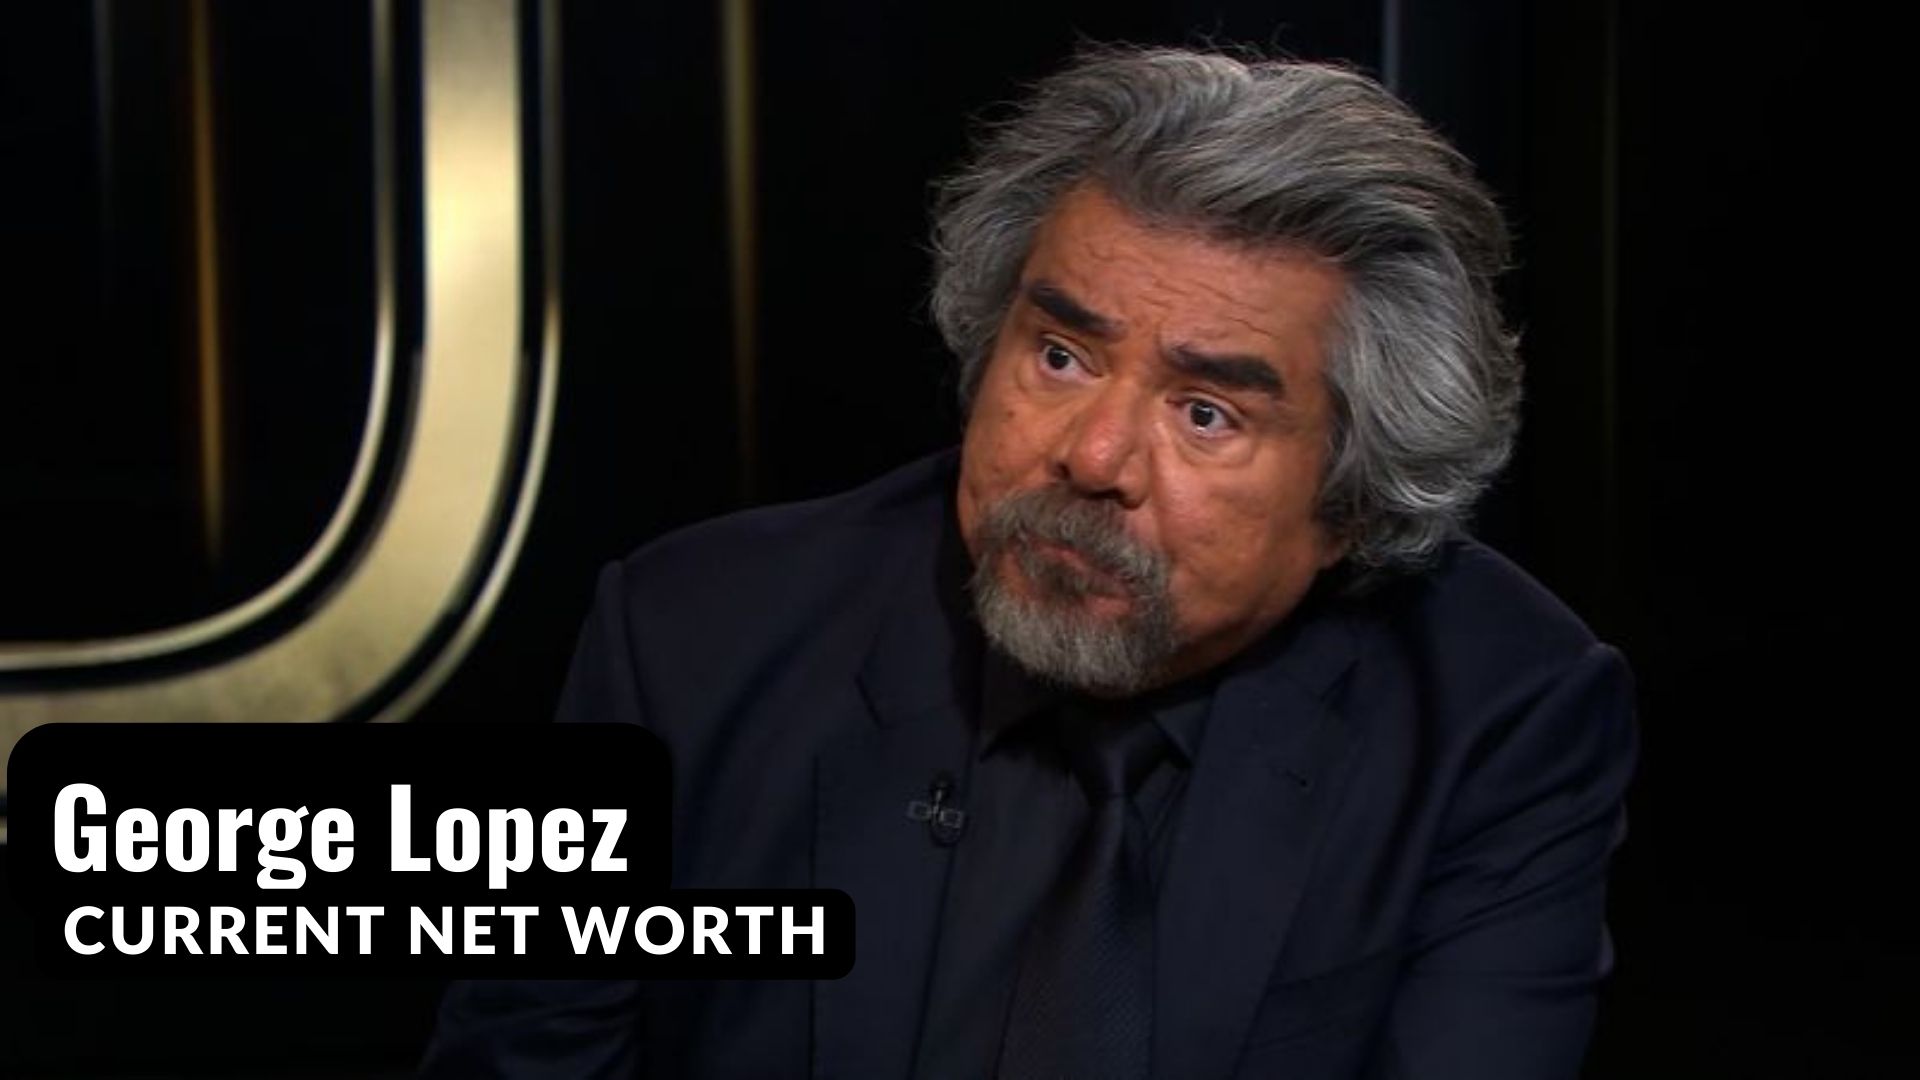 George Lopez net worth